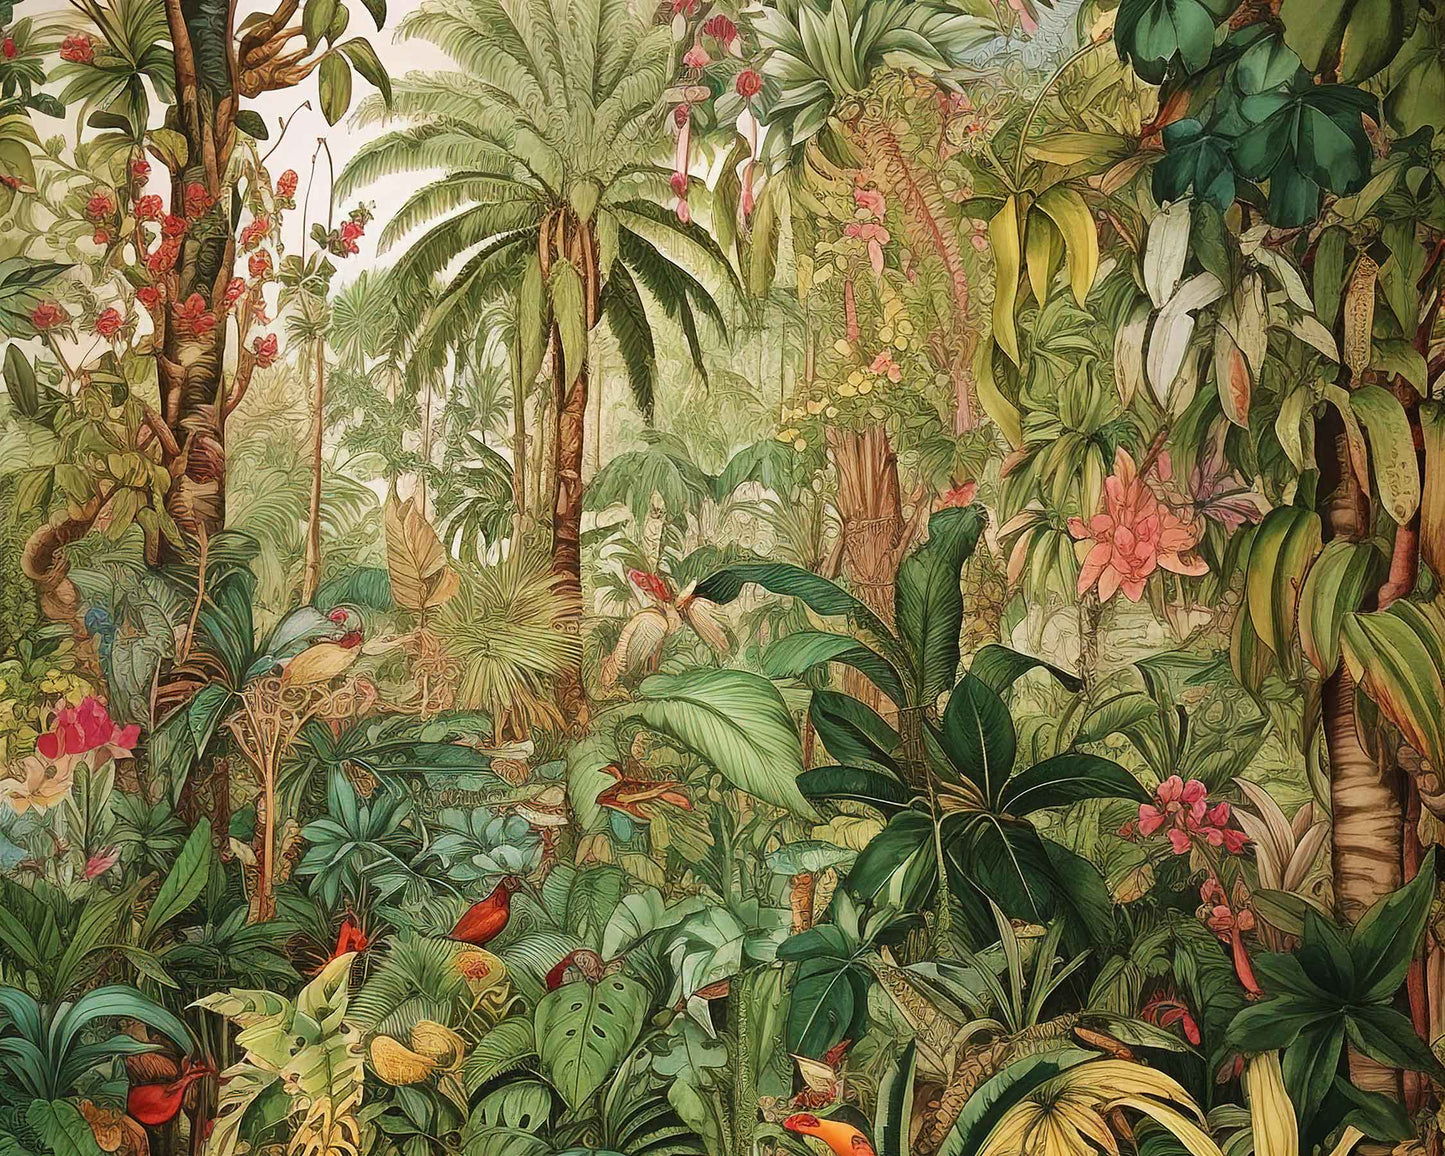 Framed Image of Victorian Botanical Jungle Vintage Wall Art, Maximalist Prints